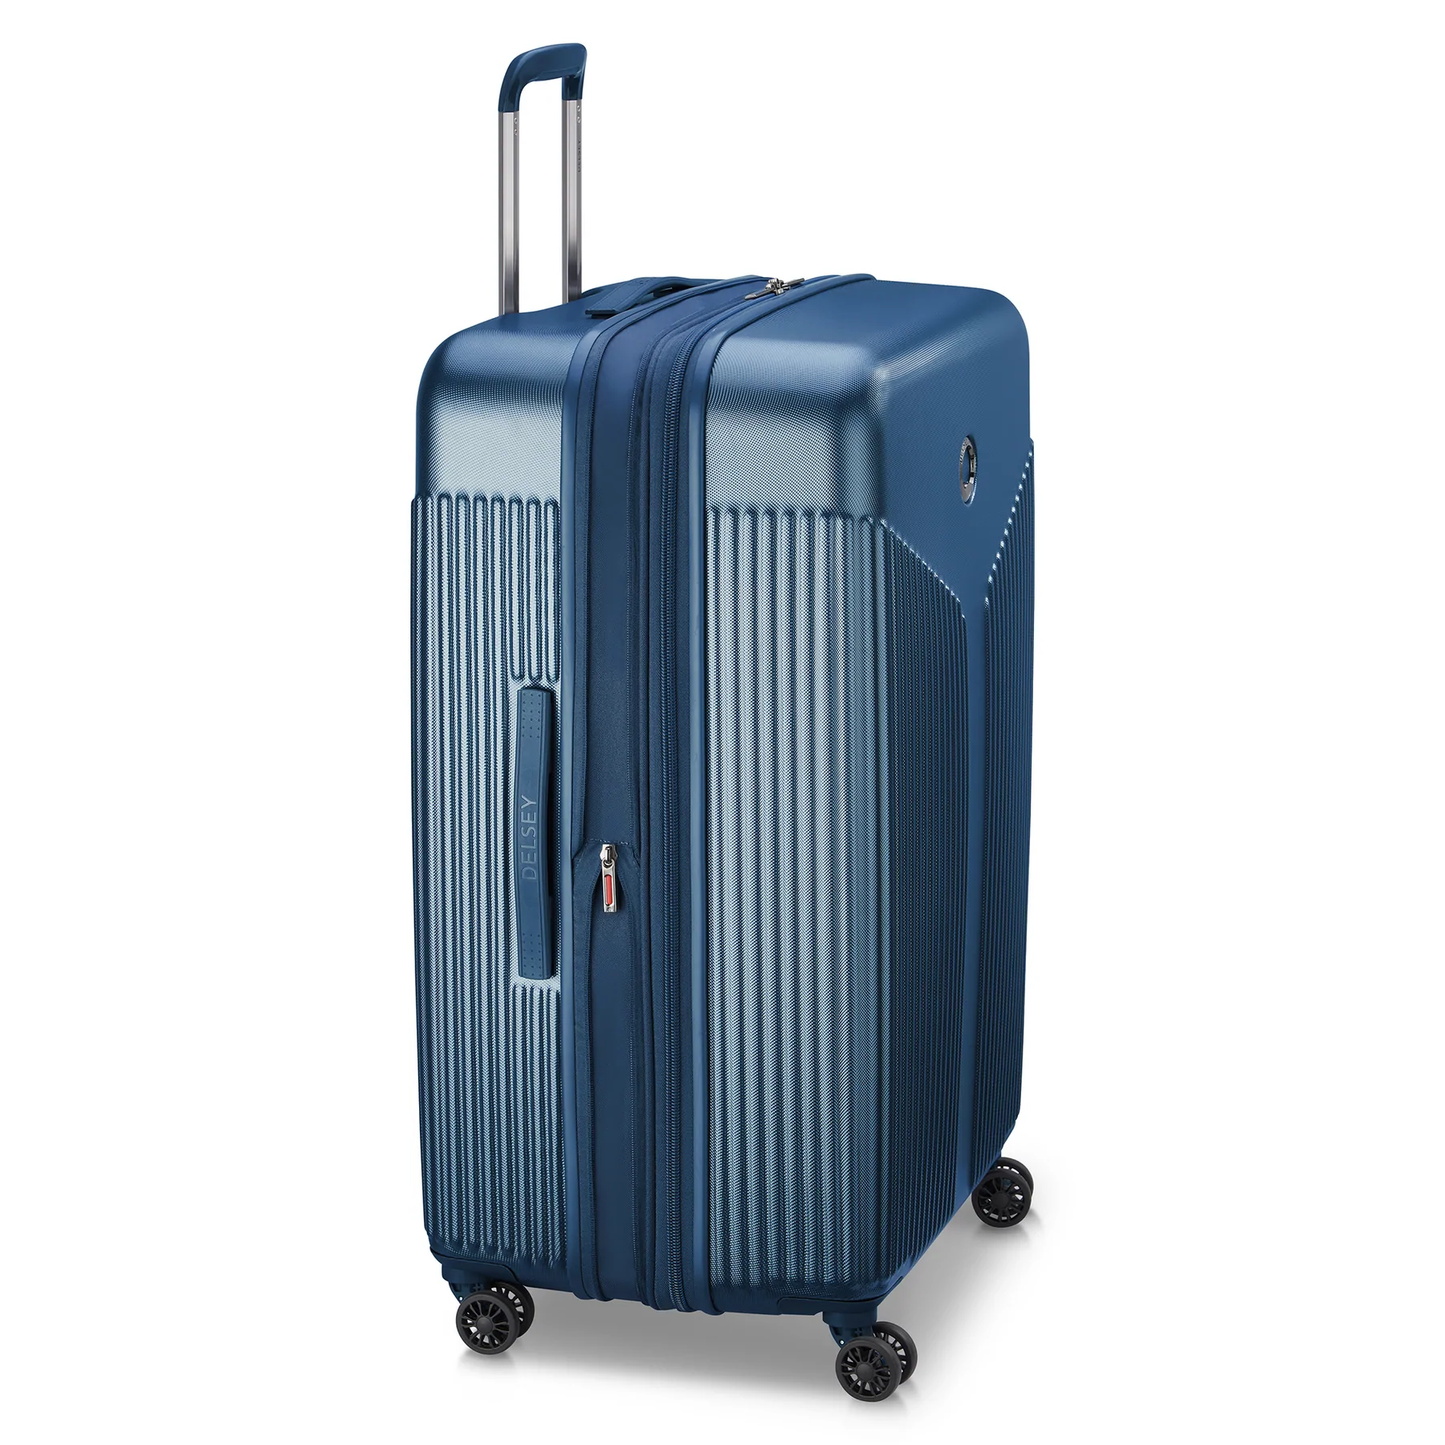 Delsey Comete 3.0 Hardcase Luggage (LARGE)